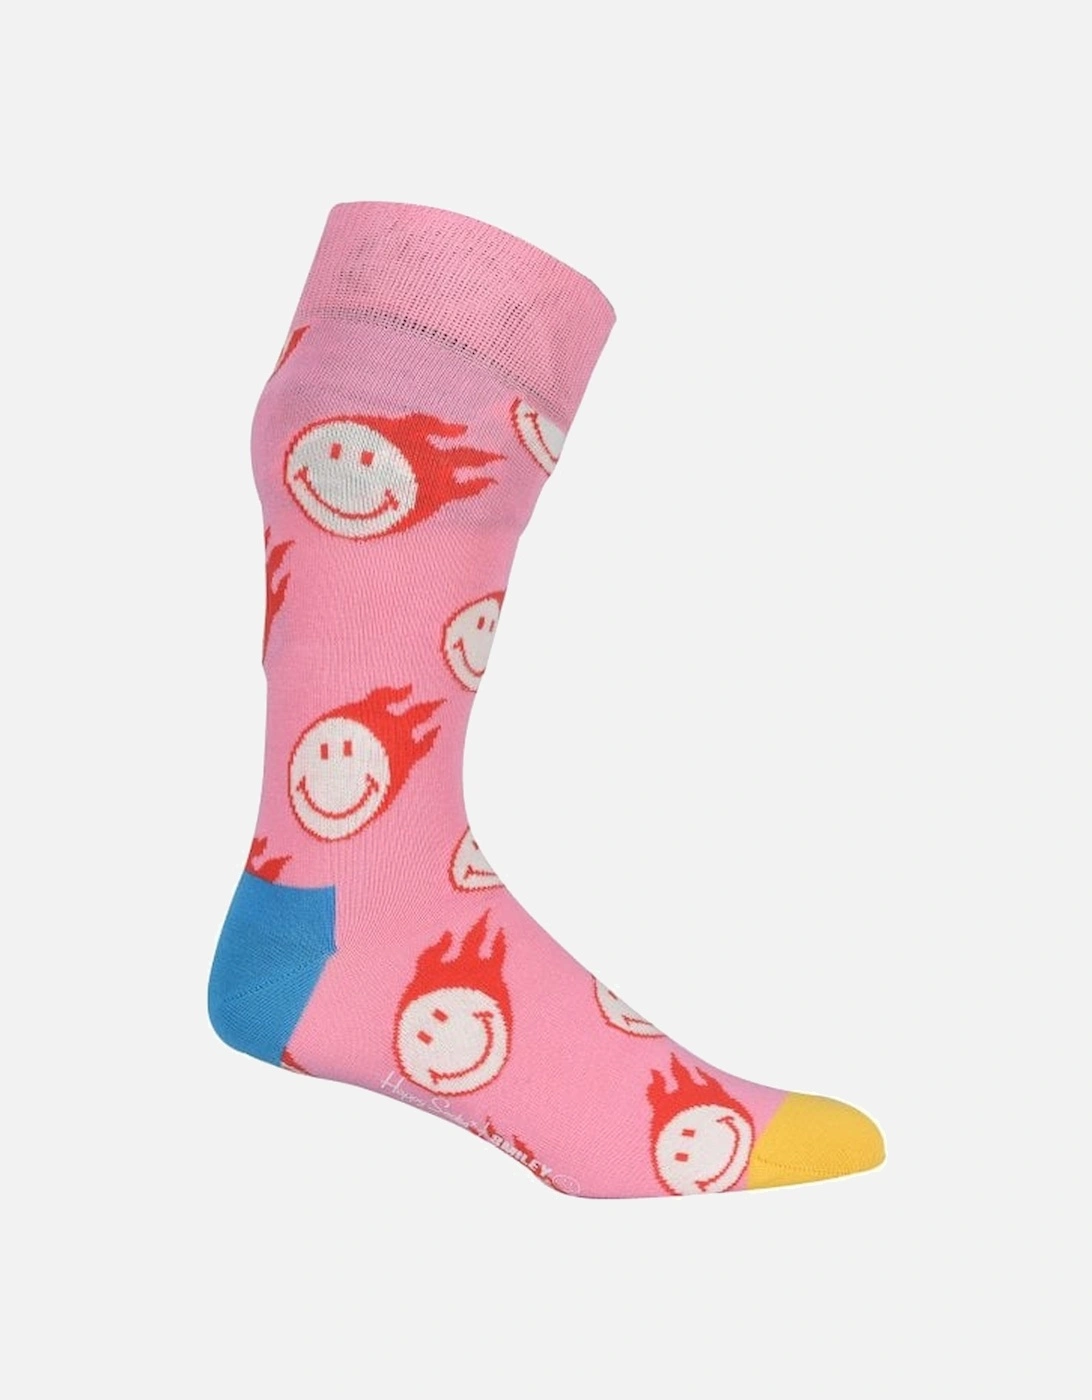 Flaming Smiley Socks, Pink